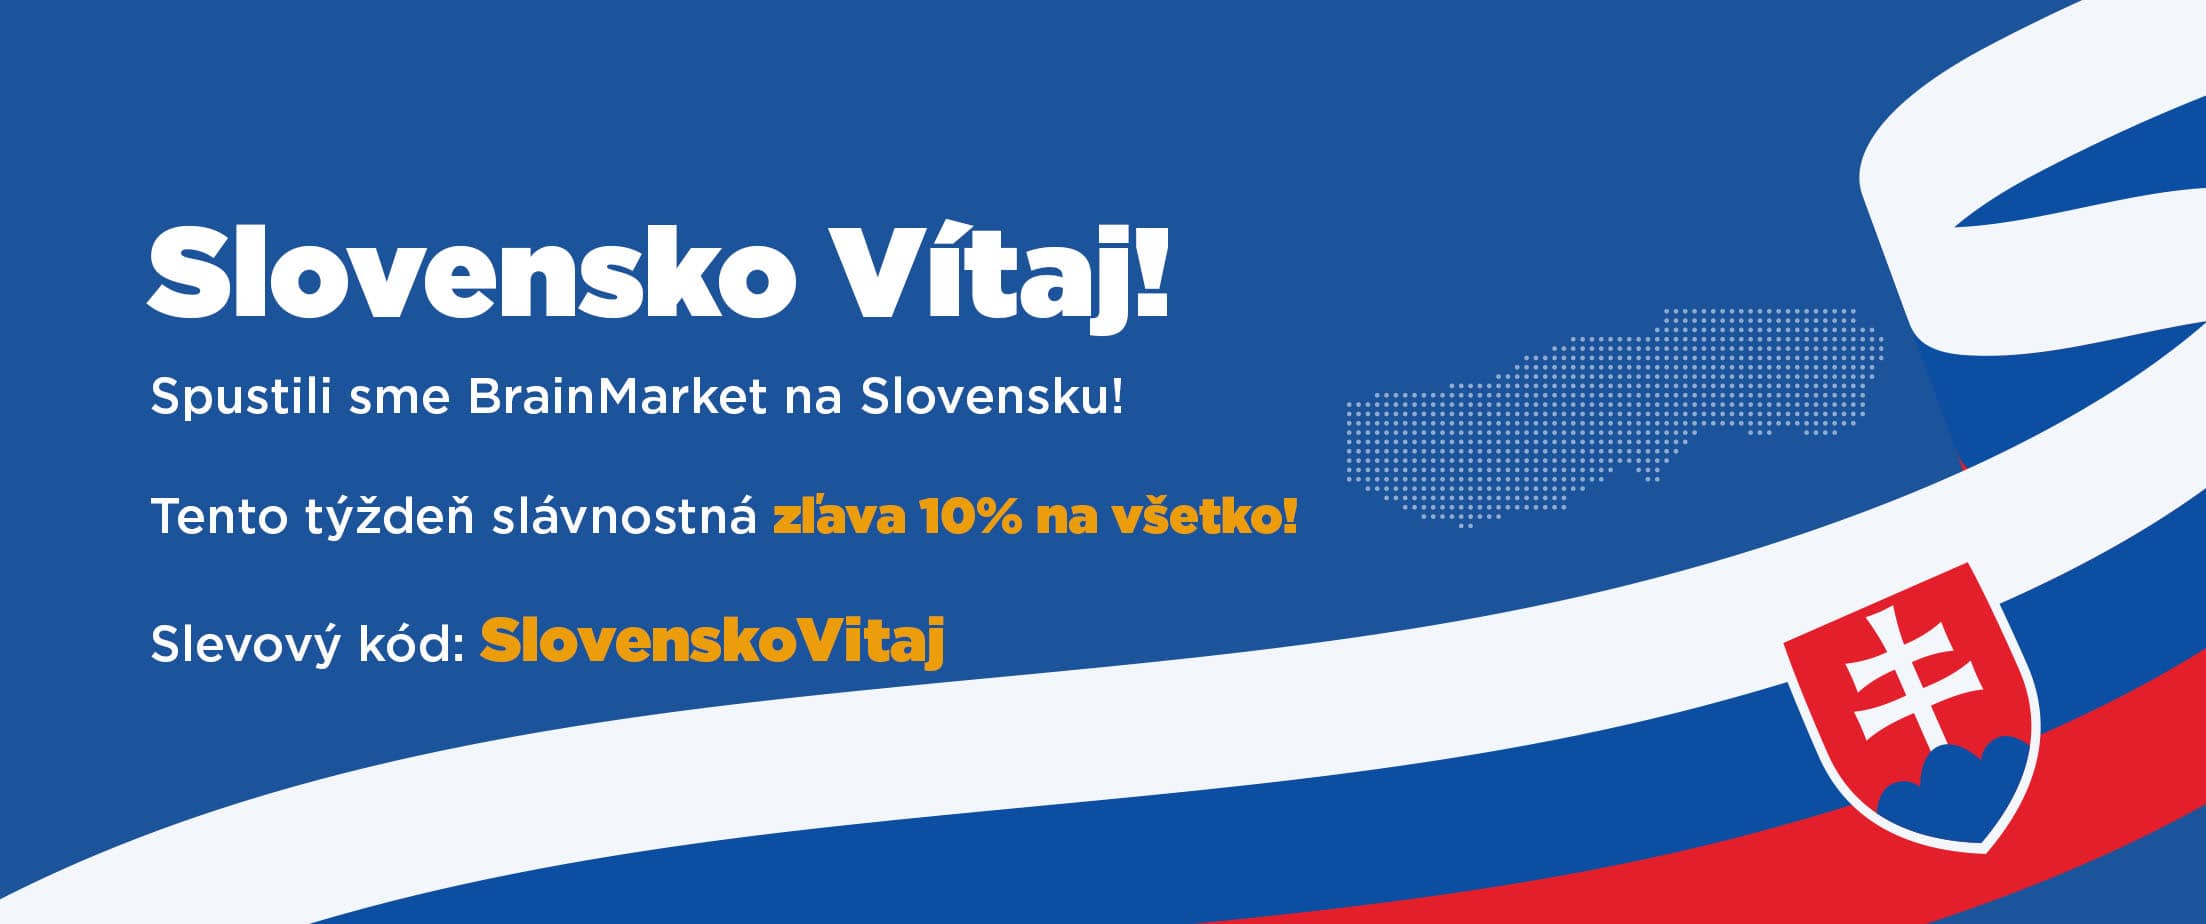 slovensko-vitaj-Eshop-pc